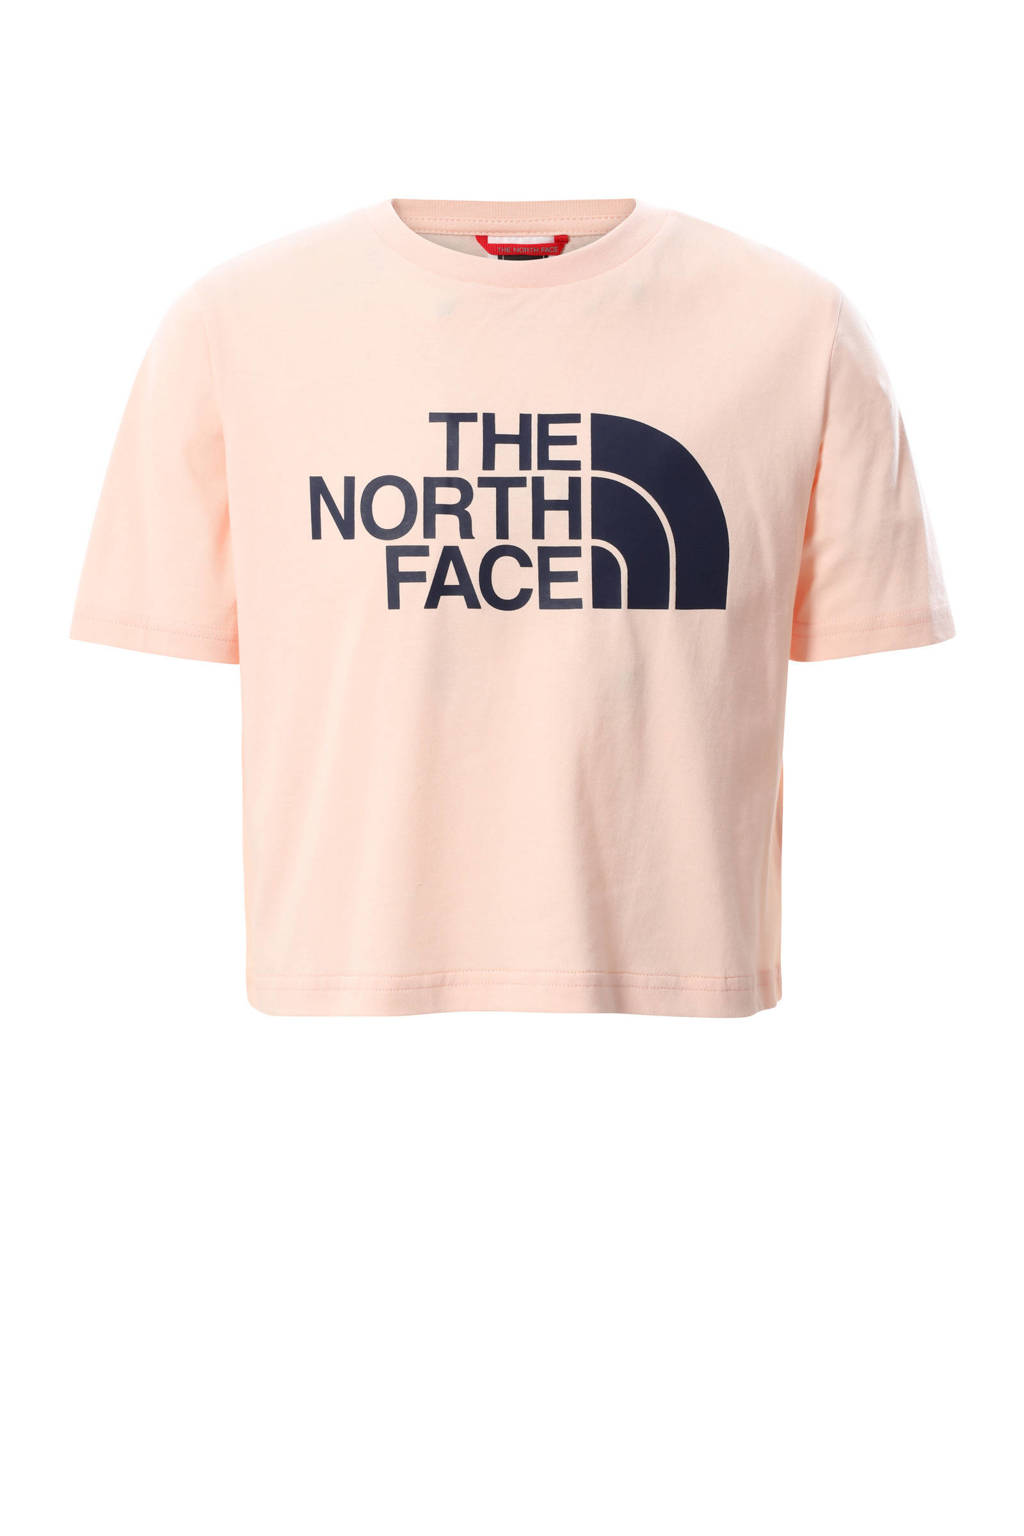 The North Face cropped T-shirt Easy met logo lichtroze/zwart, Lichtroze/zwart